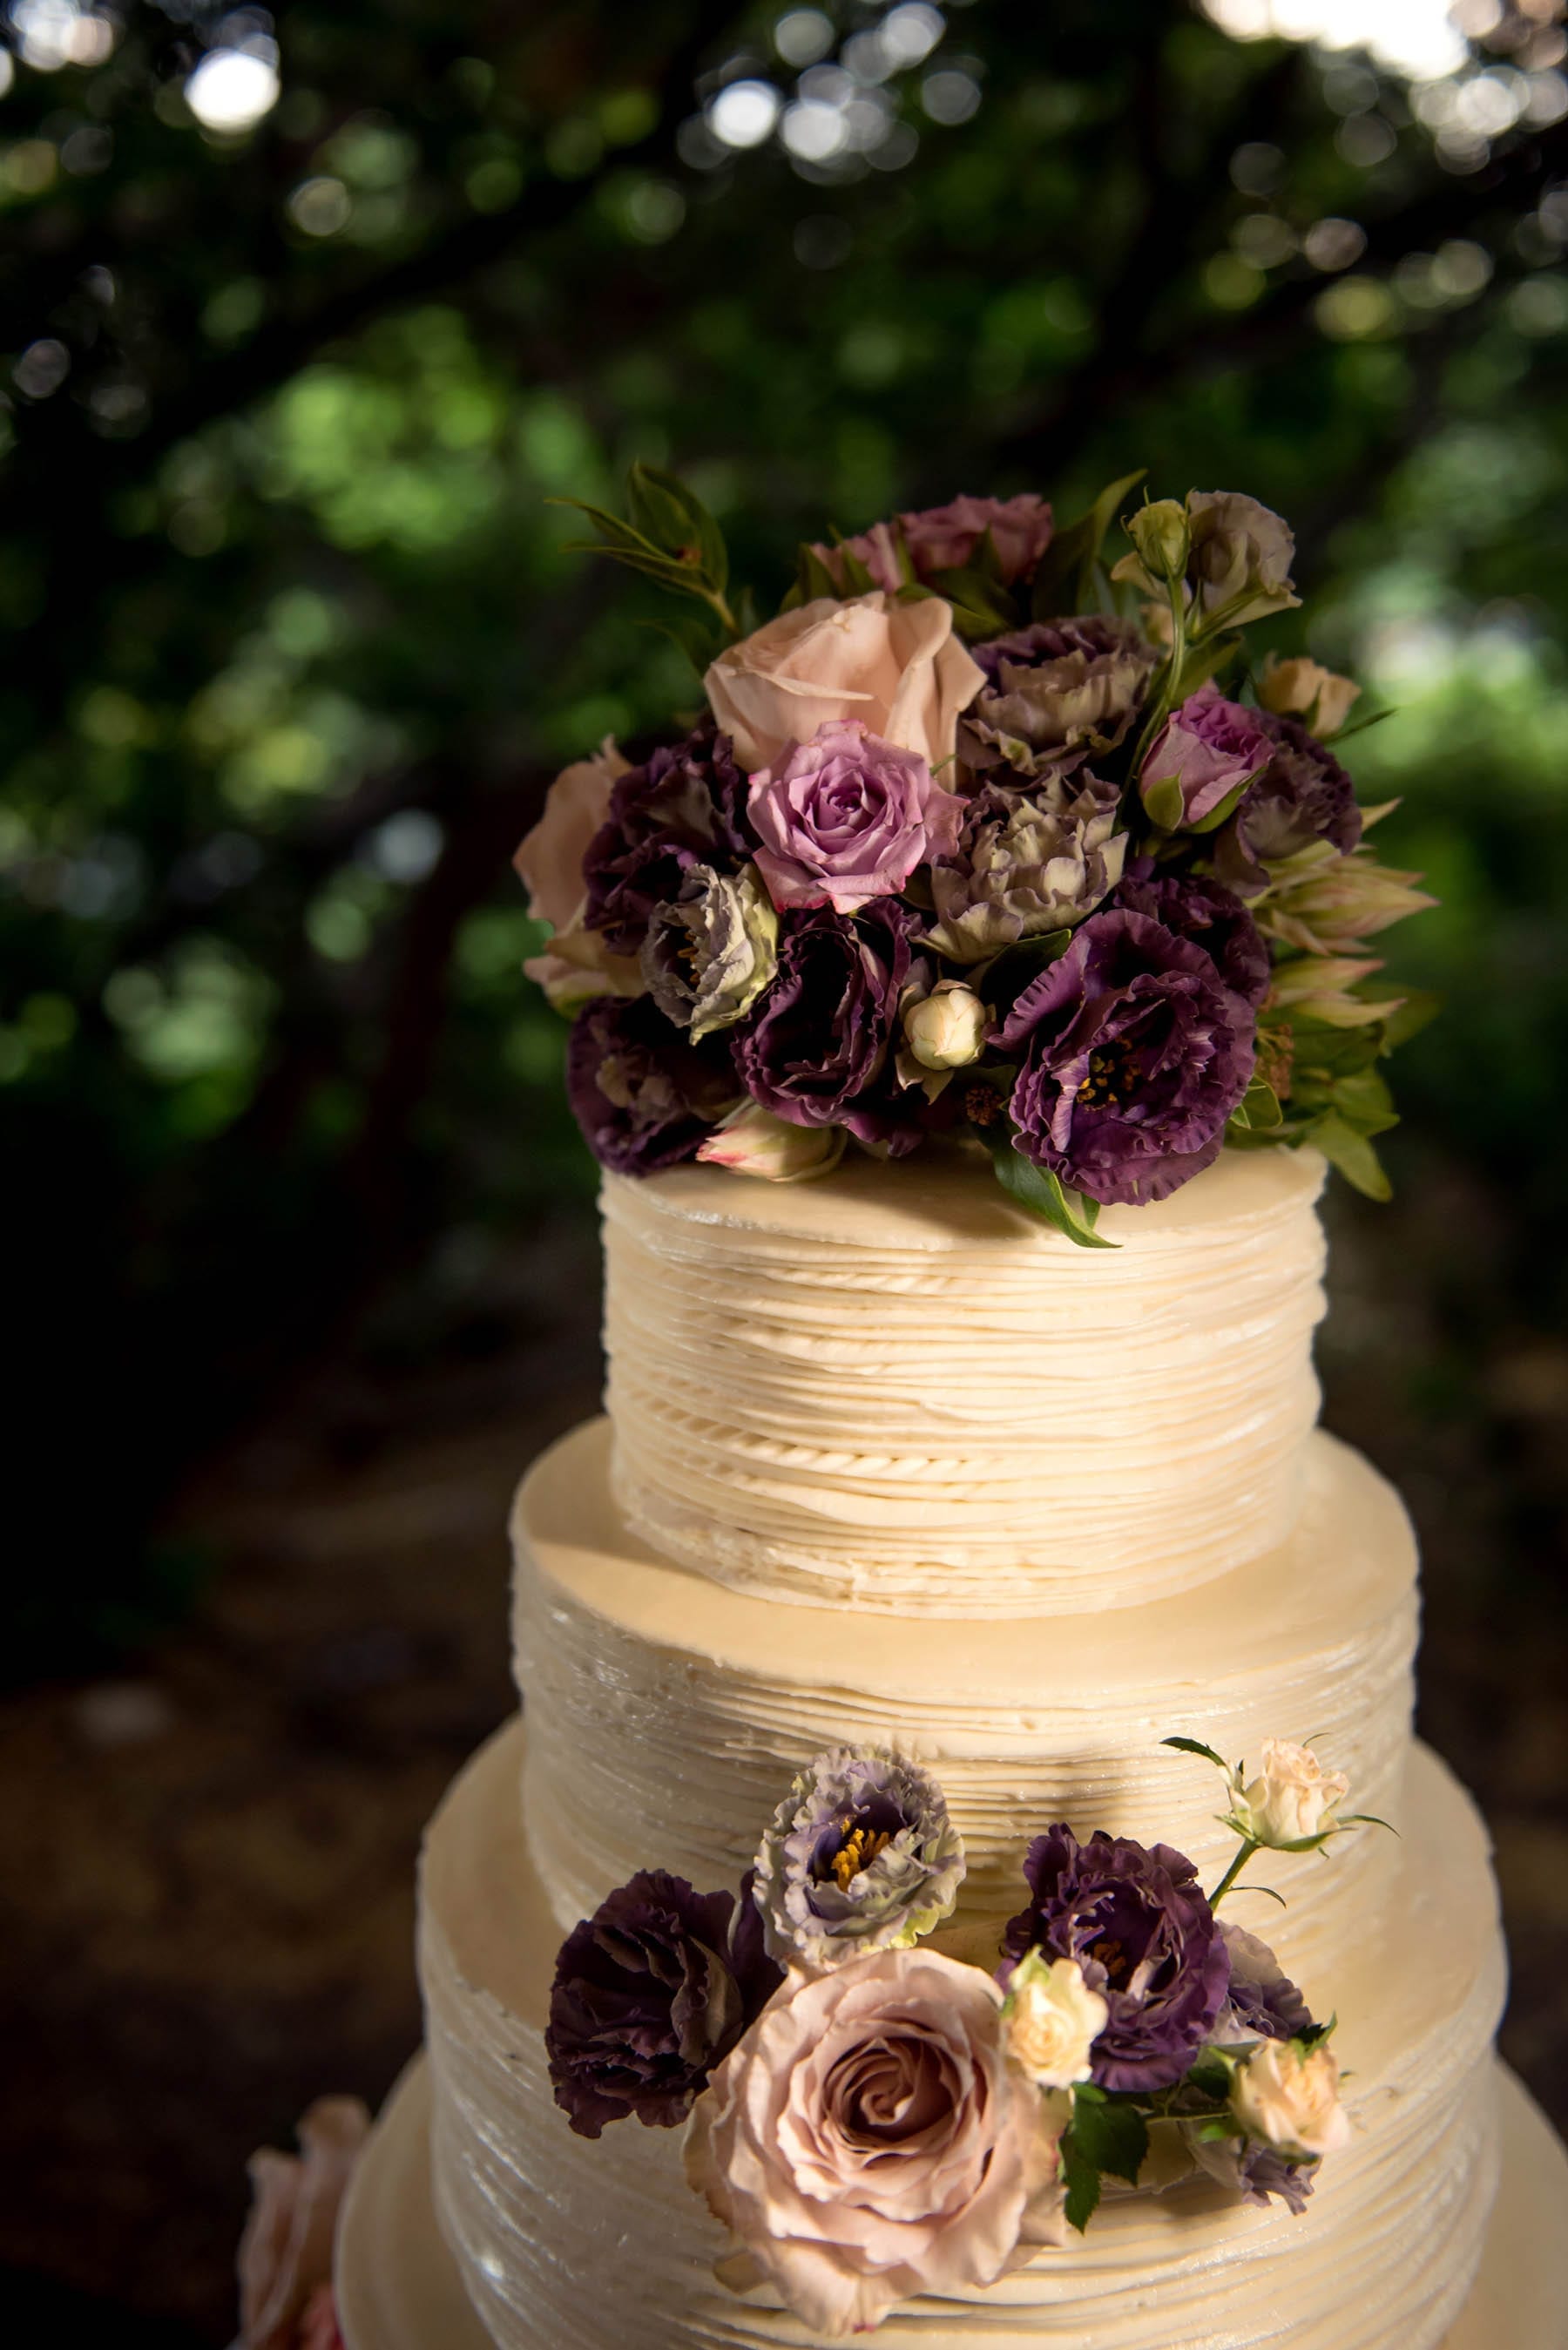 cake with floral accents New Leaf Restaurant Summer Garden Wedding Details